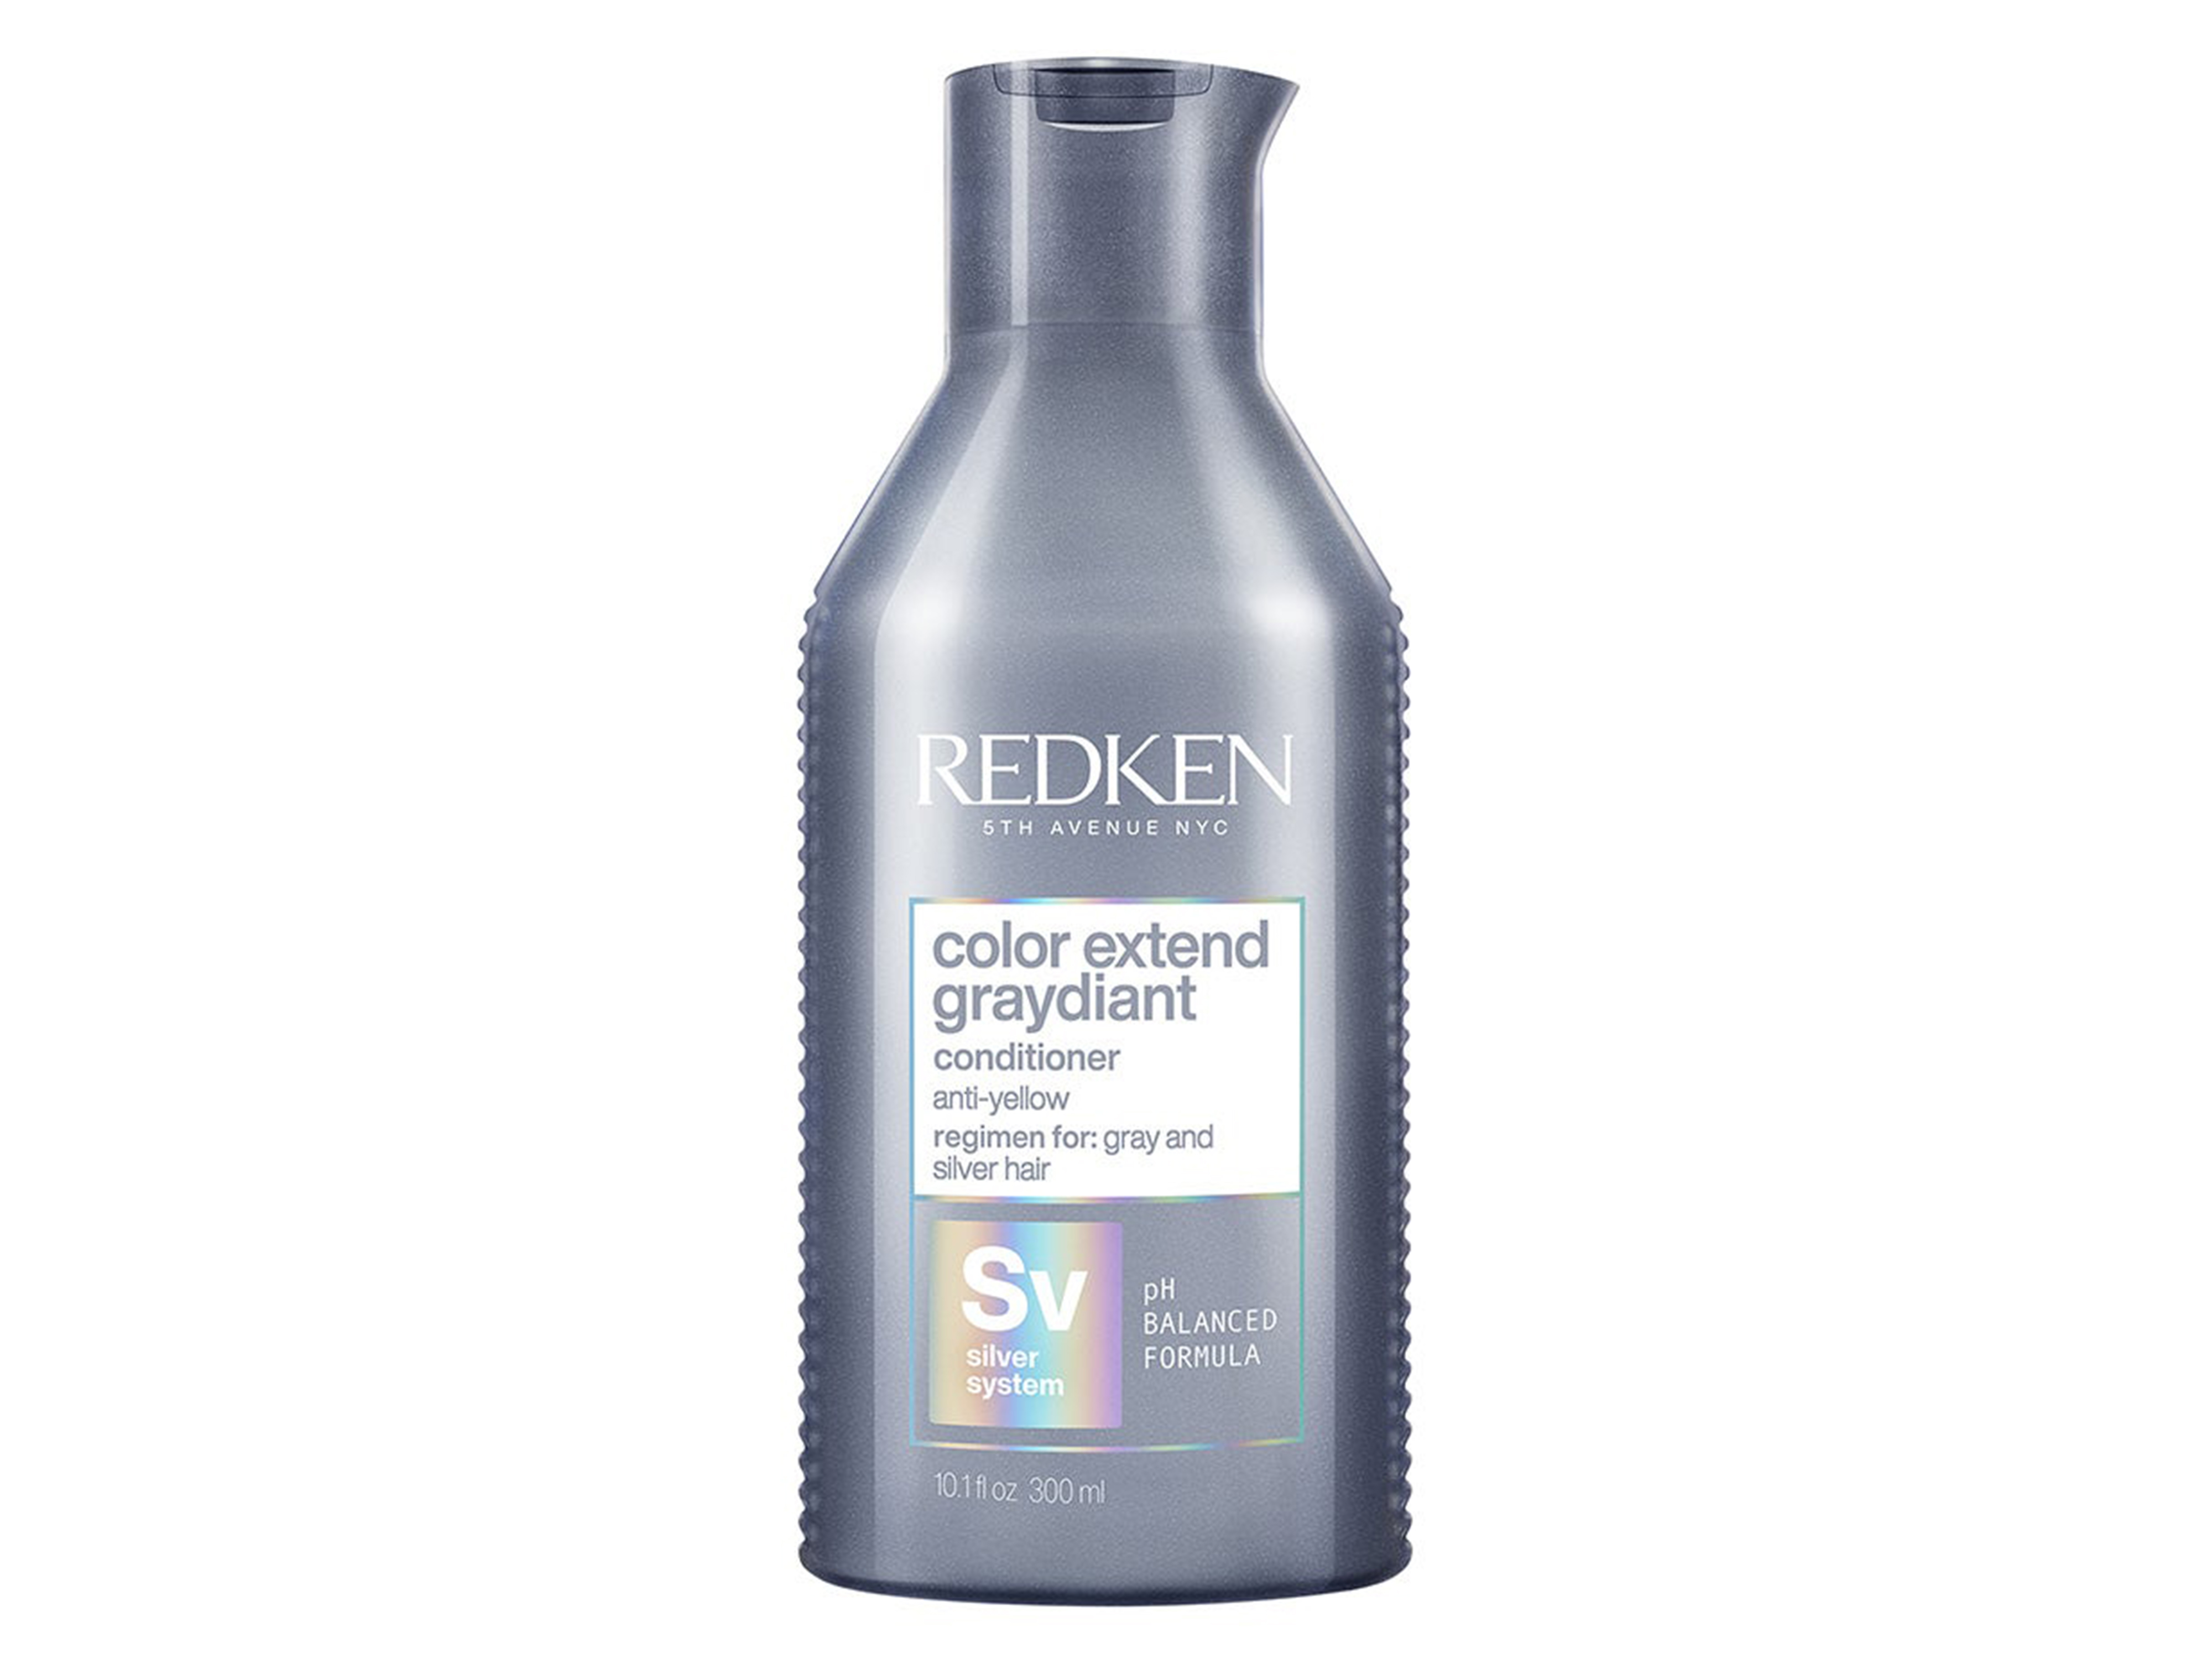 Redken Color Extend Graydiant Conditioner, 300 ml